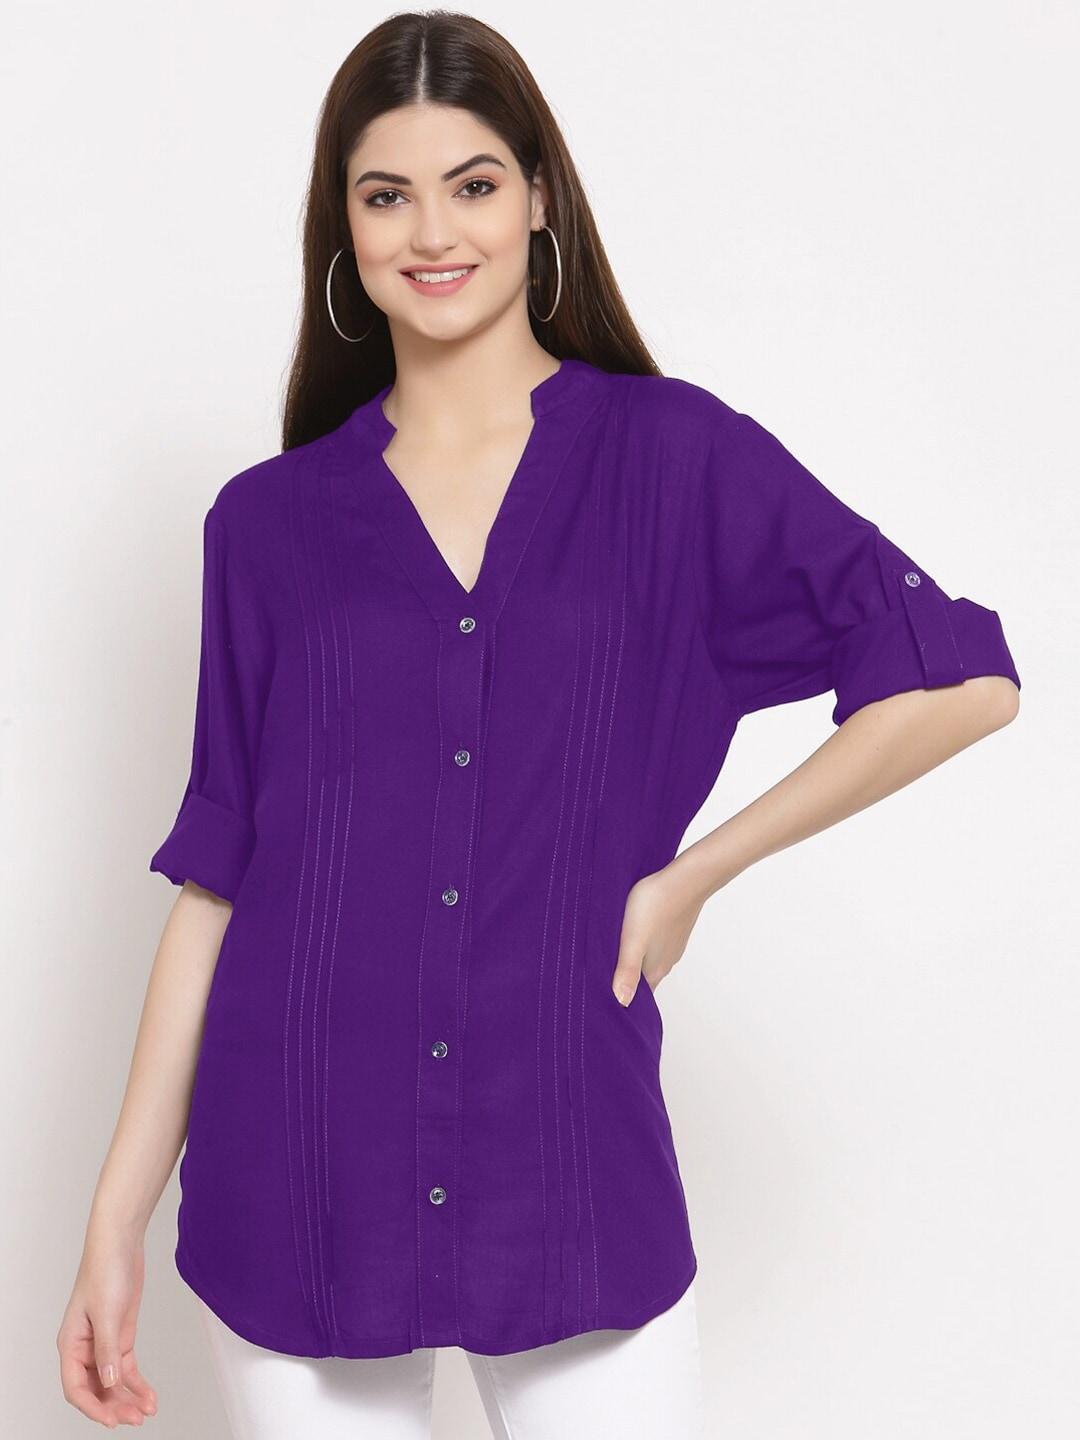 patrorna-women-purple-comfort-casual-shirt